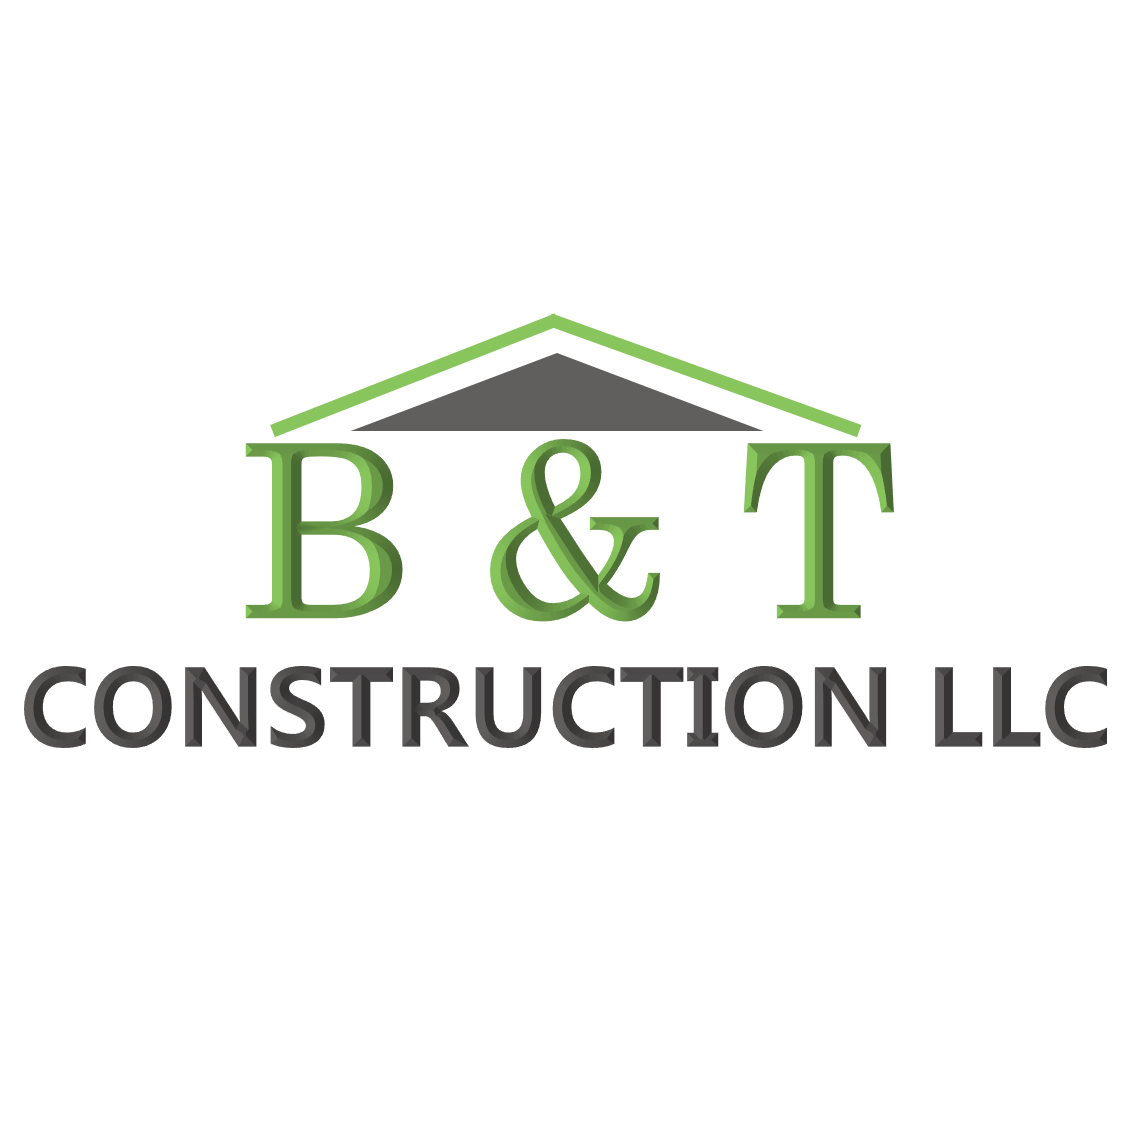 B & T Construction LLC - Topeka, KS - (785)220-5425 | ShowMeLocal.com